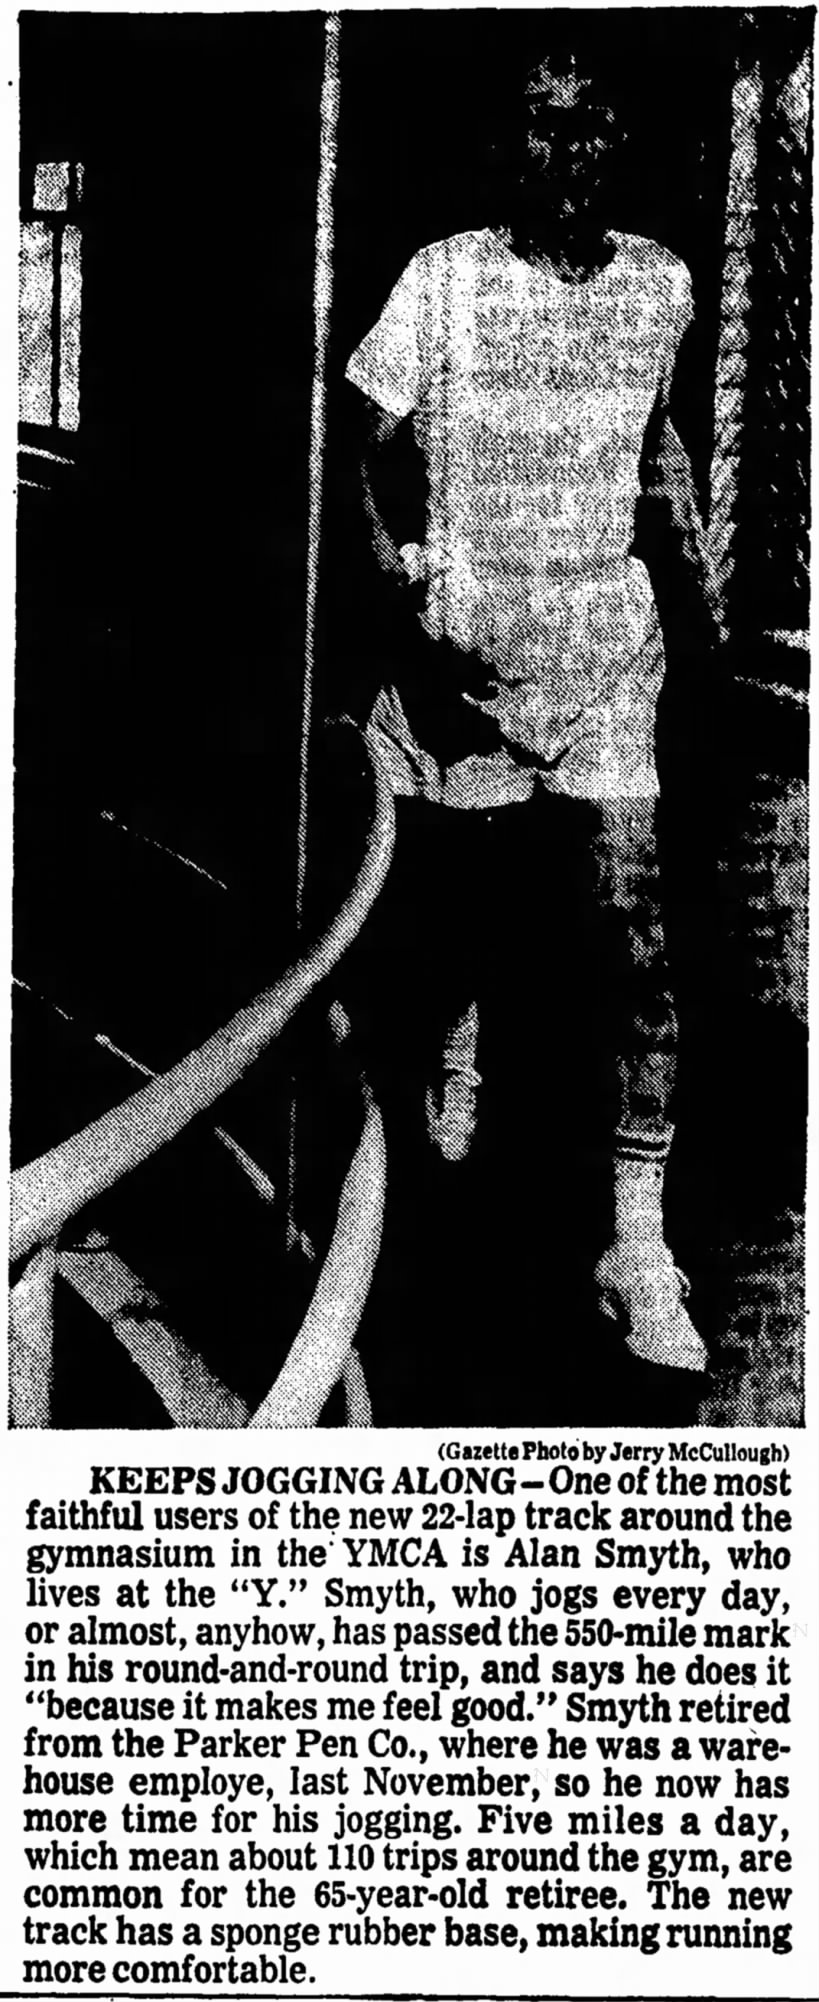 Alan Smyth jogging
10 April 1969